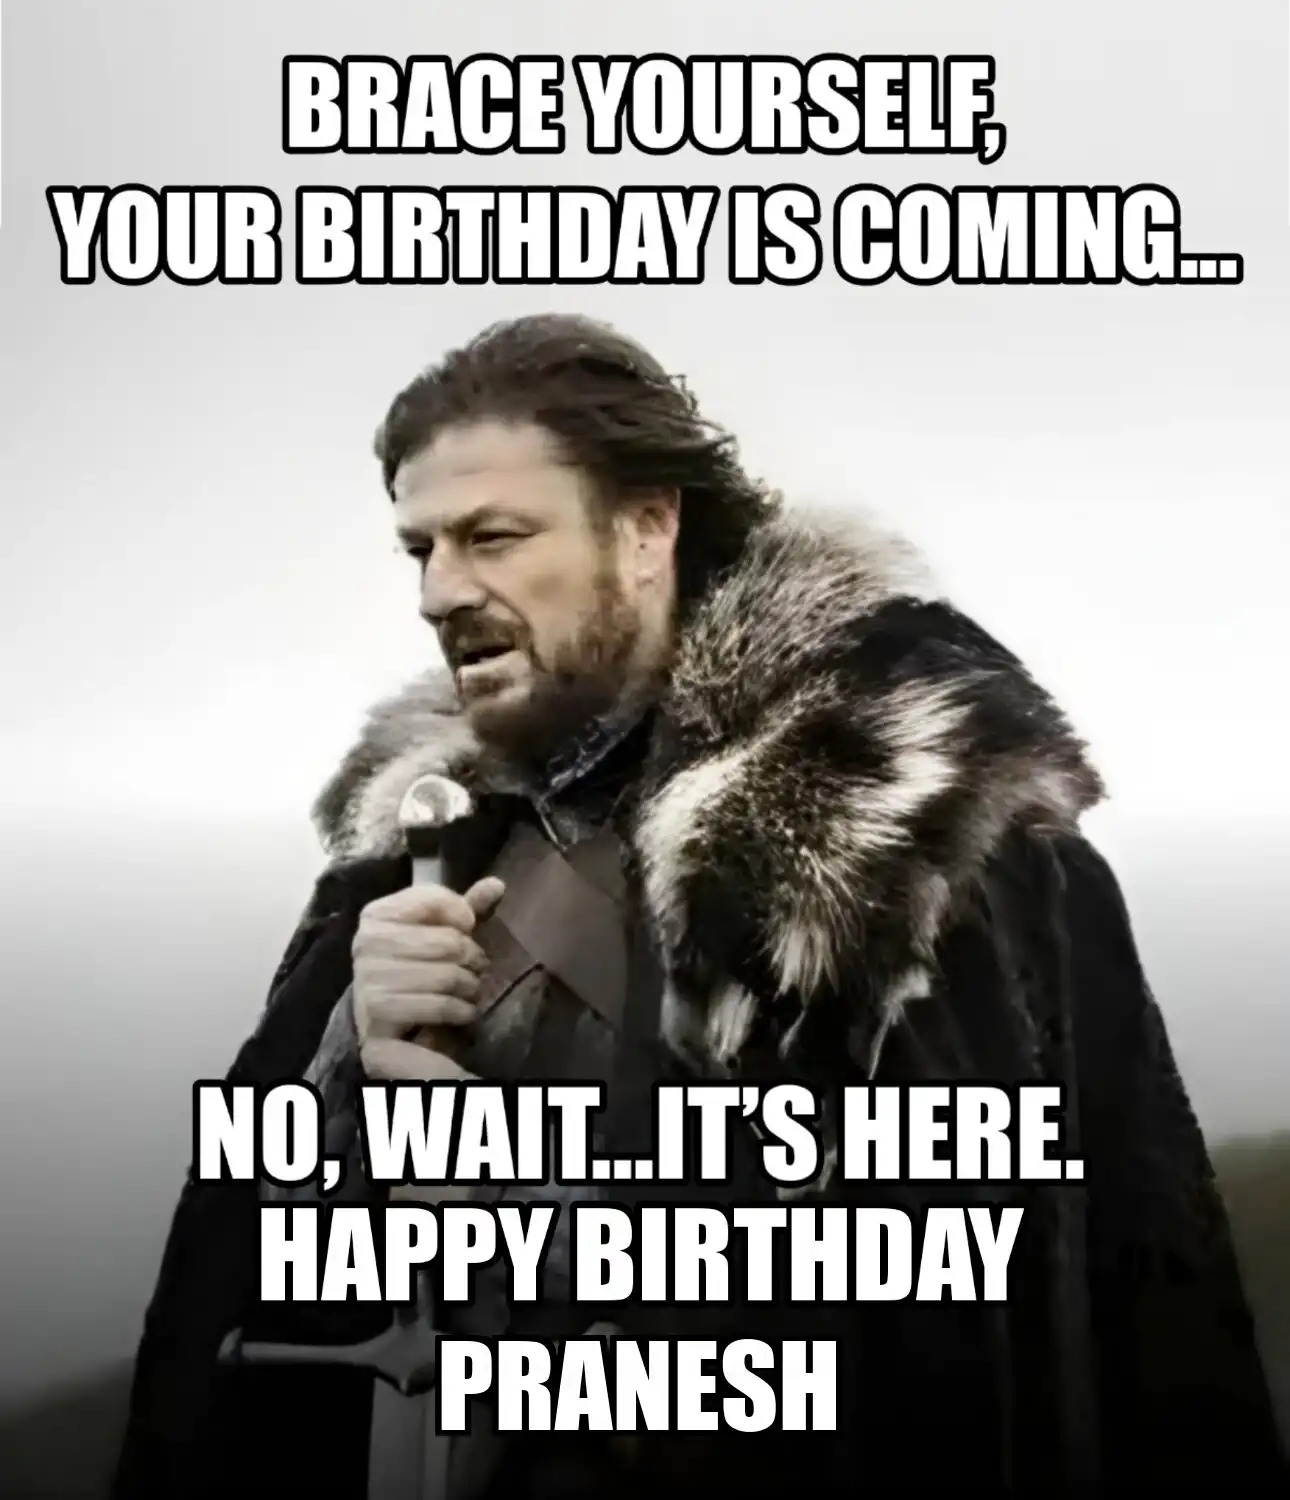 Happy Birthday Pranesh Brace Yourself Your Birthday Is Coming Meme